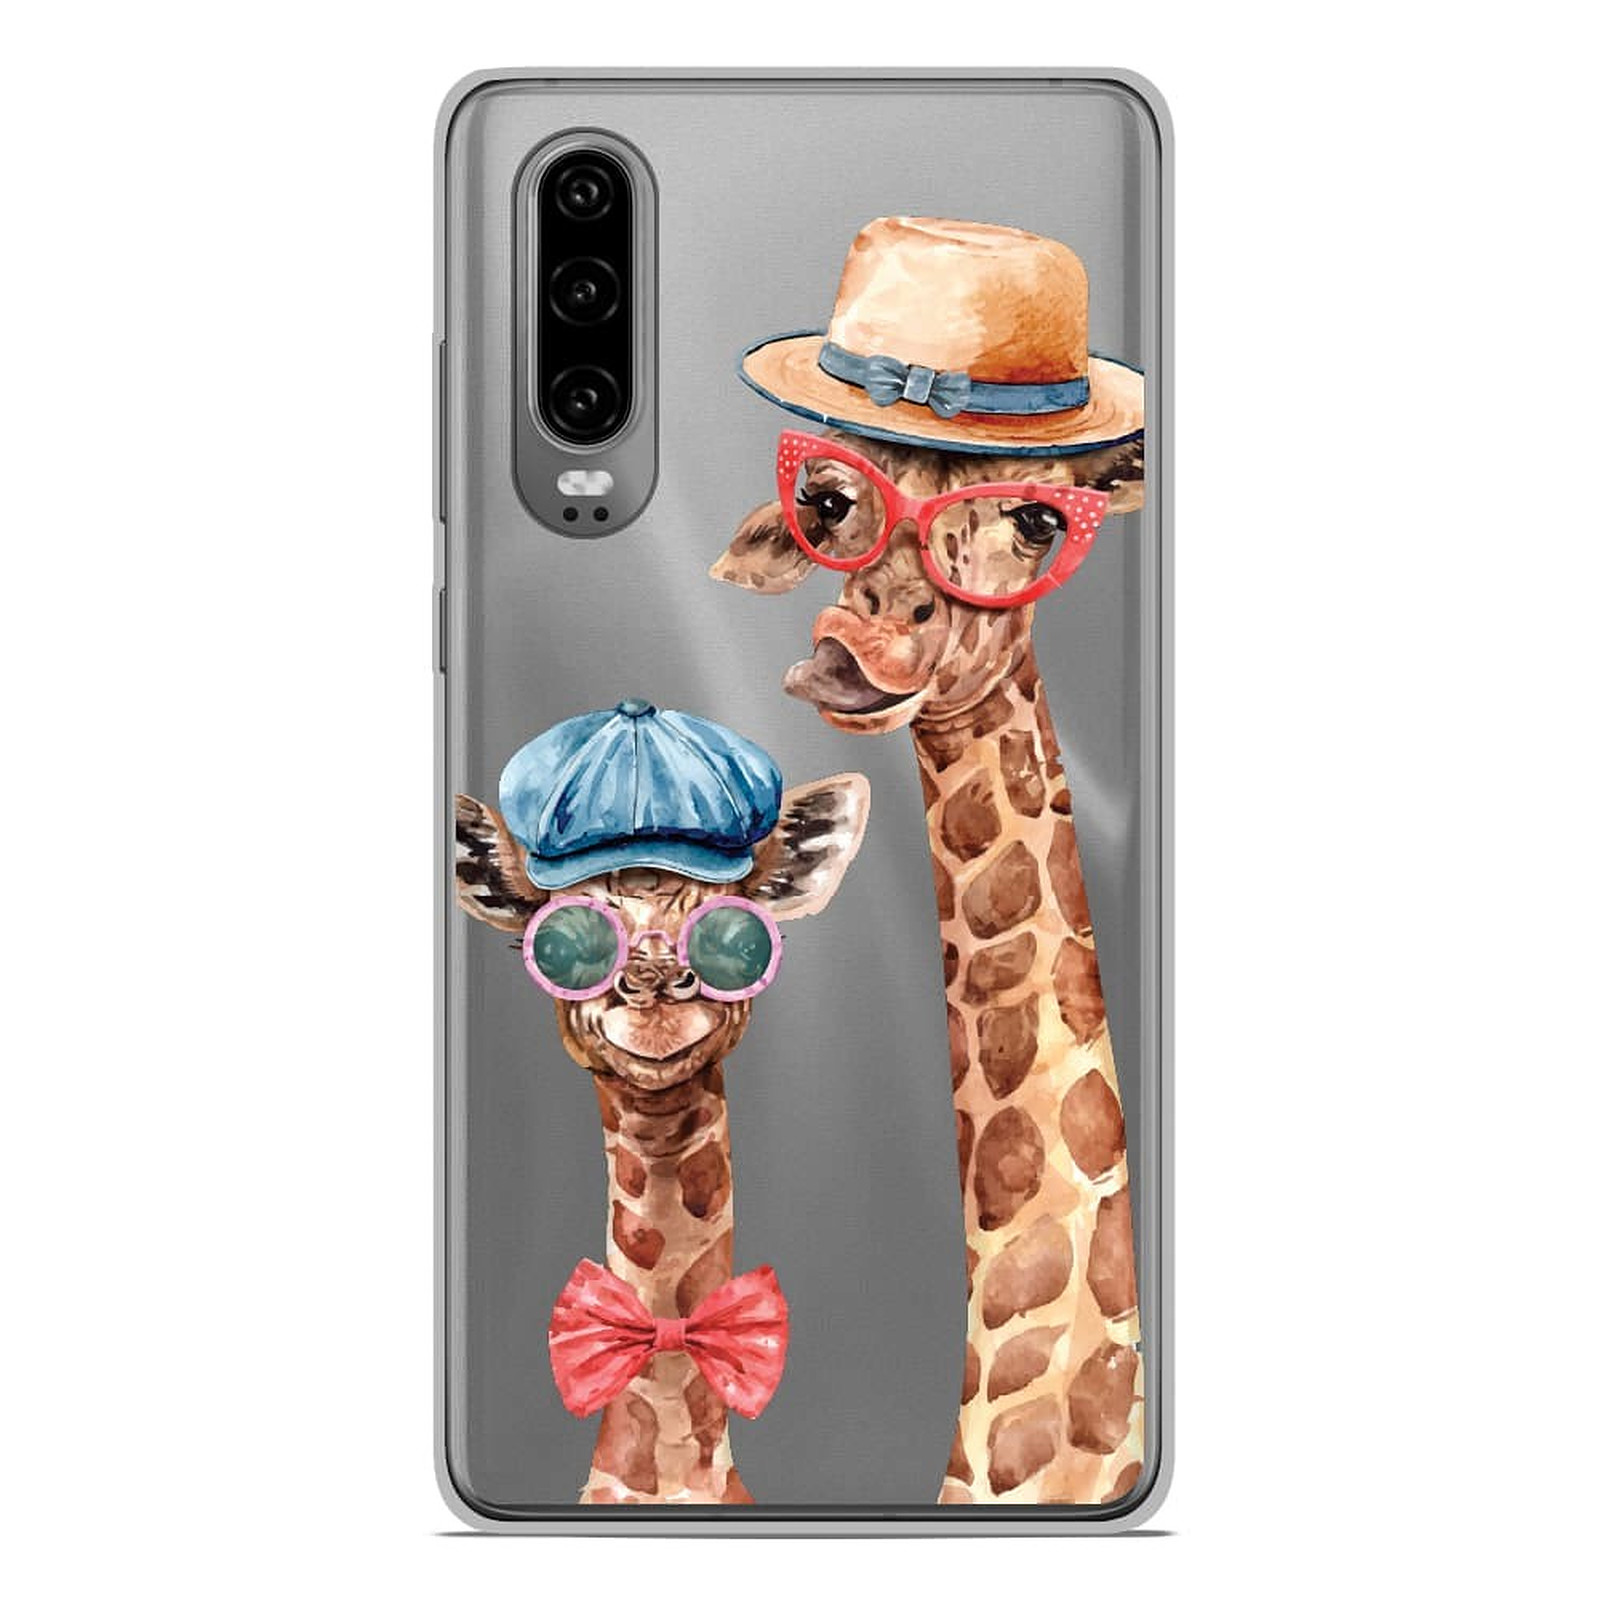 1001 Coques Coque silicone gel Huawei P30 motif Funny Girafe - Coque telephone 1001Coques